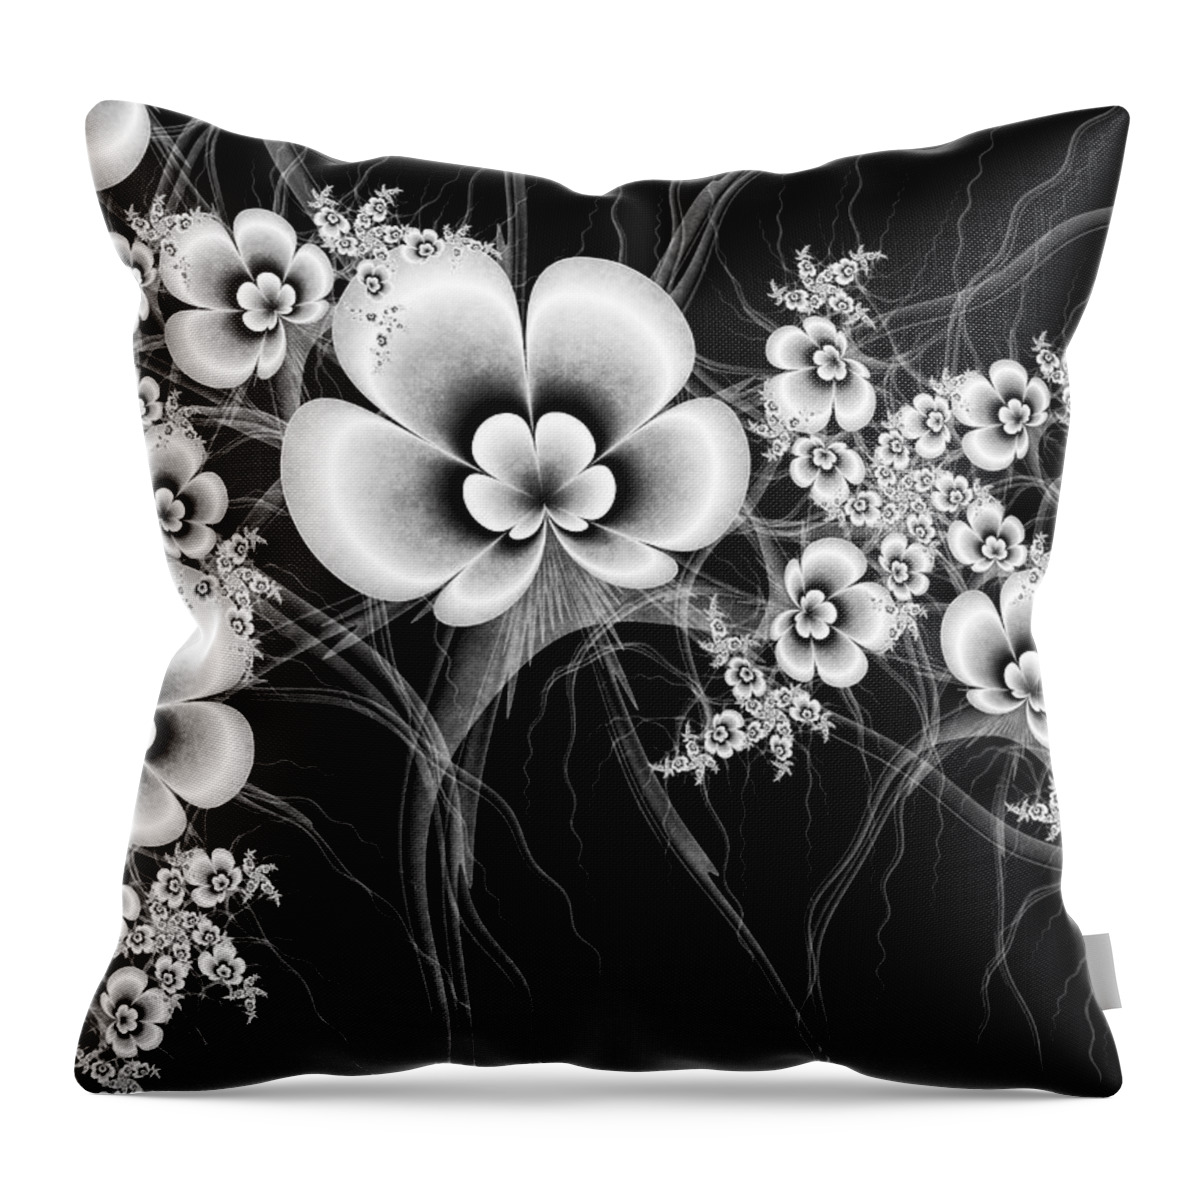 Digital Art Throw Pillow featuring the digital art Flowers Black and White by Gabiw Art